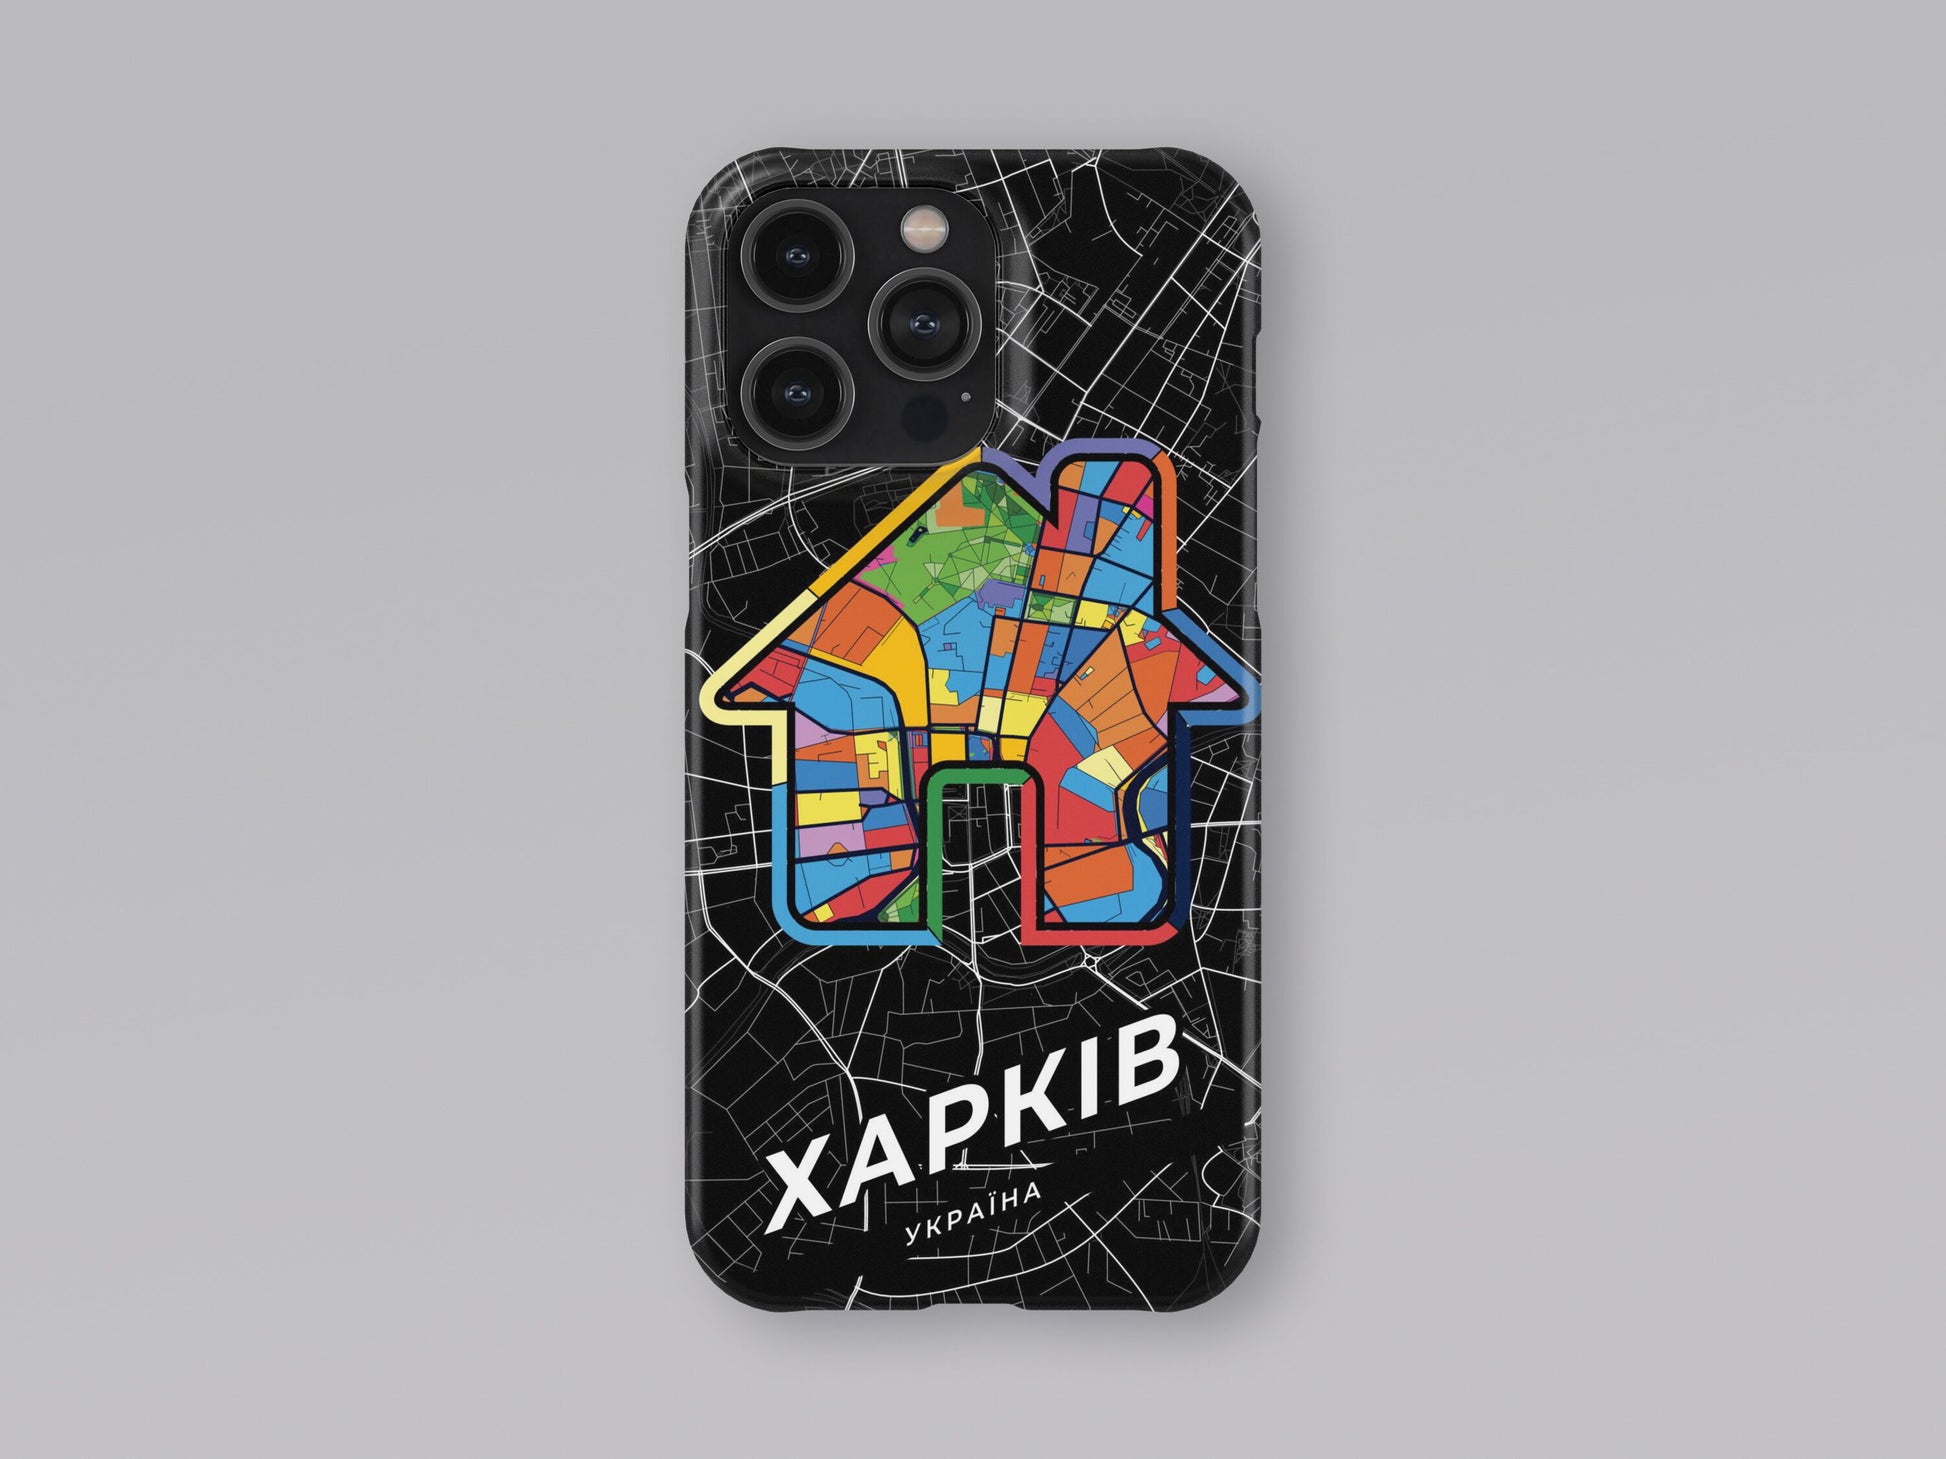 Kharkiv Ukraine slim phone case with colorful icon. Birthday, wedding or housewarming gift. Couple match cases. 3